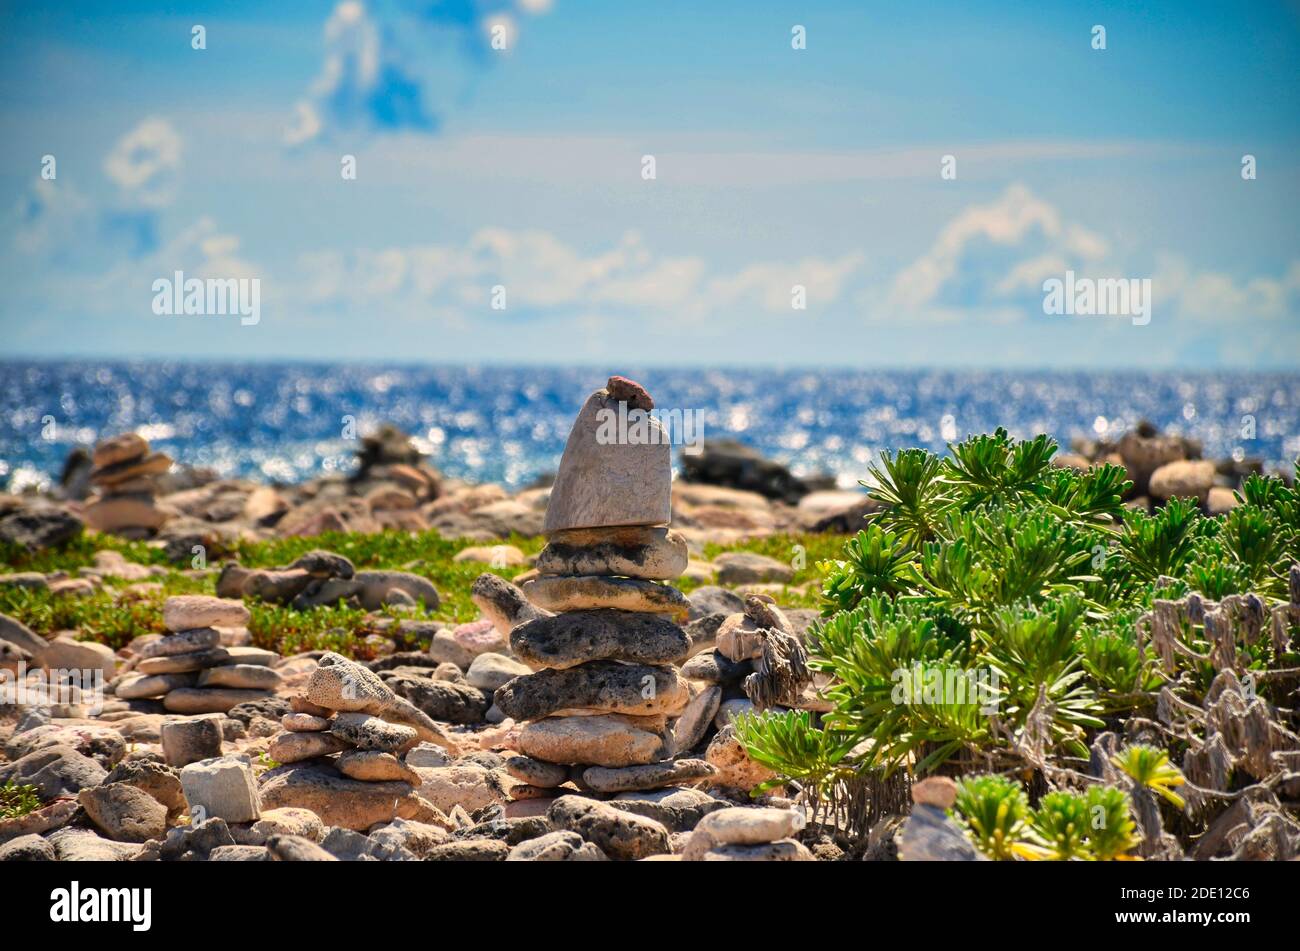 cairn am Meer der karibik, Insel bonaire, antillen abc Insel niederlande, Stein am Meer Stockfoto